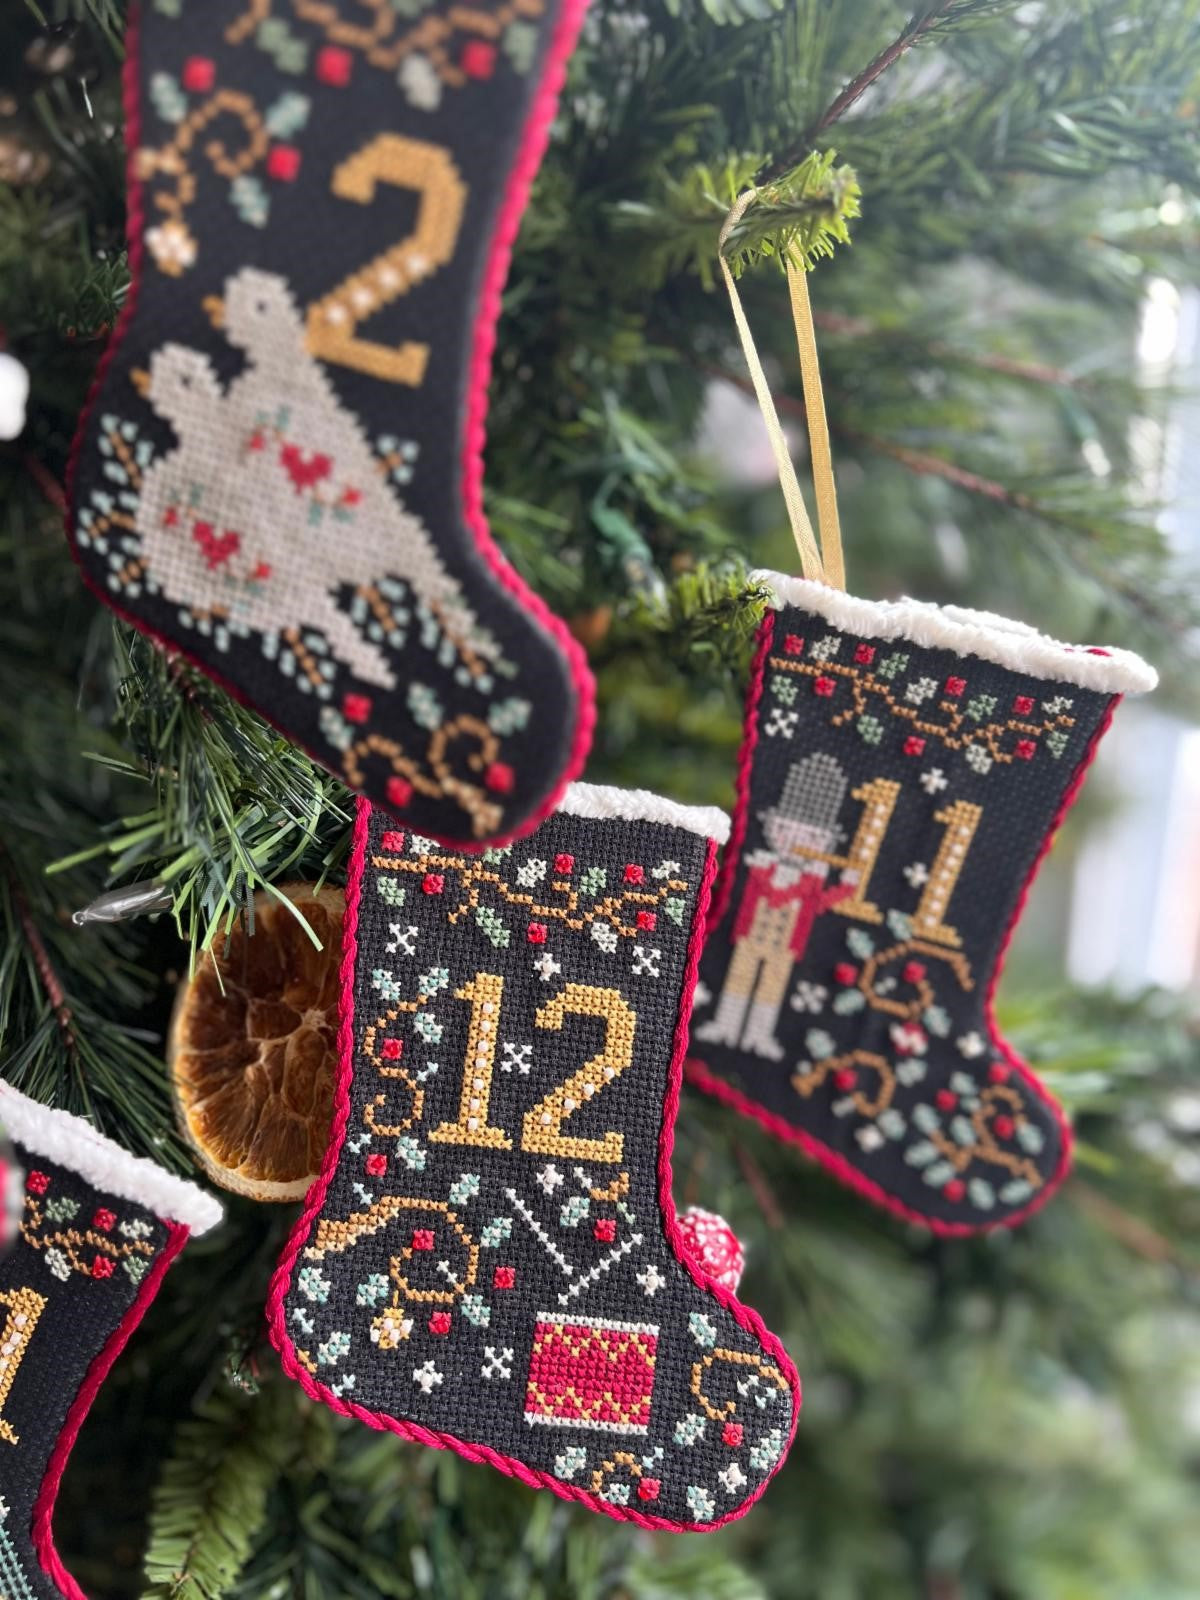 12 Days of Christmas Stockings - Cross Stitch Book by Annie Beez Folk Art